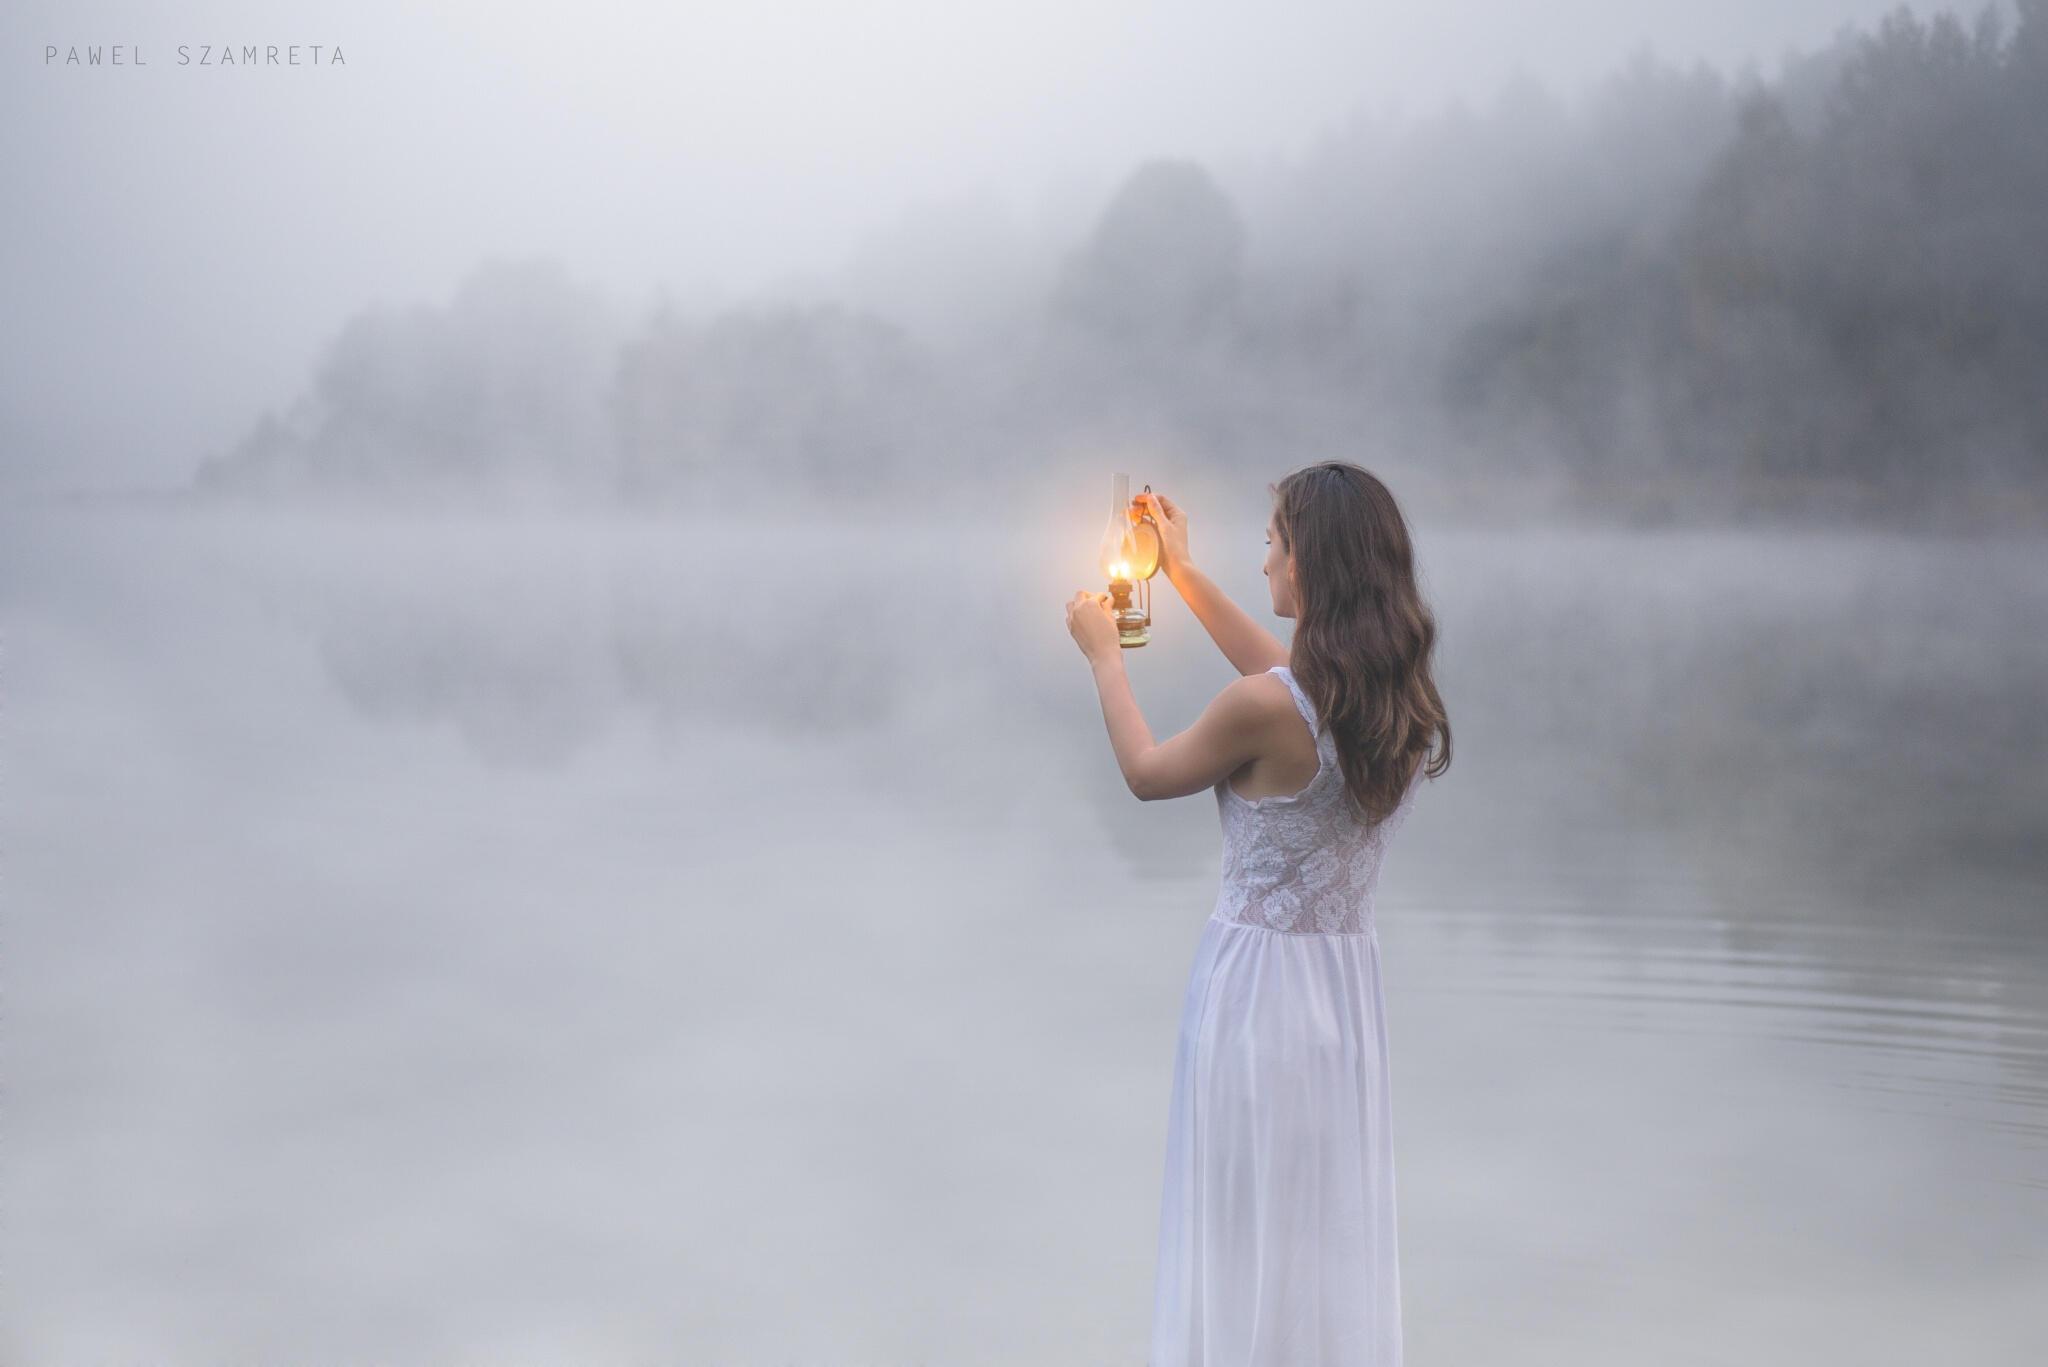 Душа душу видит издалека. Девушка в тумане. Фотосессия в тумане. Девушка свет. Фотосессия в тумане девушка.